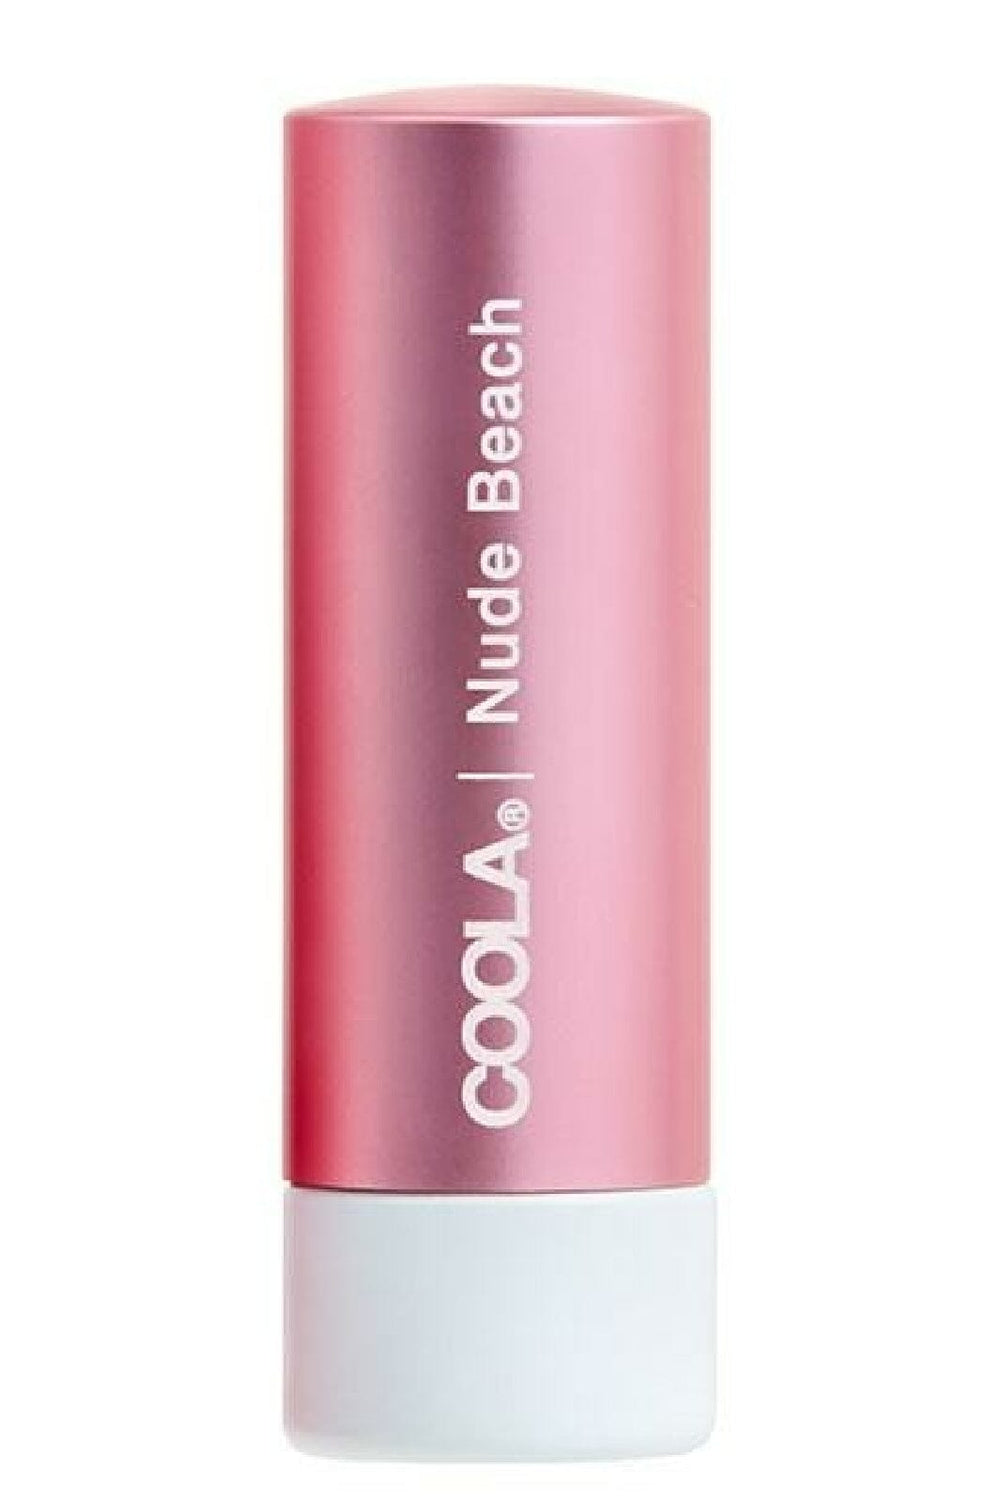 Coola - Mineral Liplux Tinted Lip Balm SPF 30 - Nude Beach (Caramel) Læbepleje 